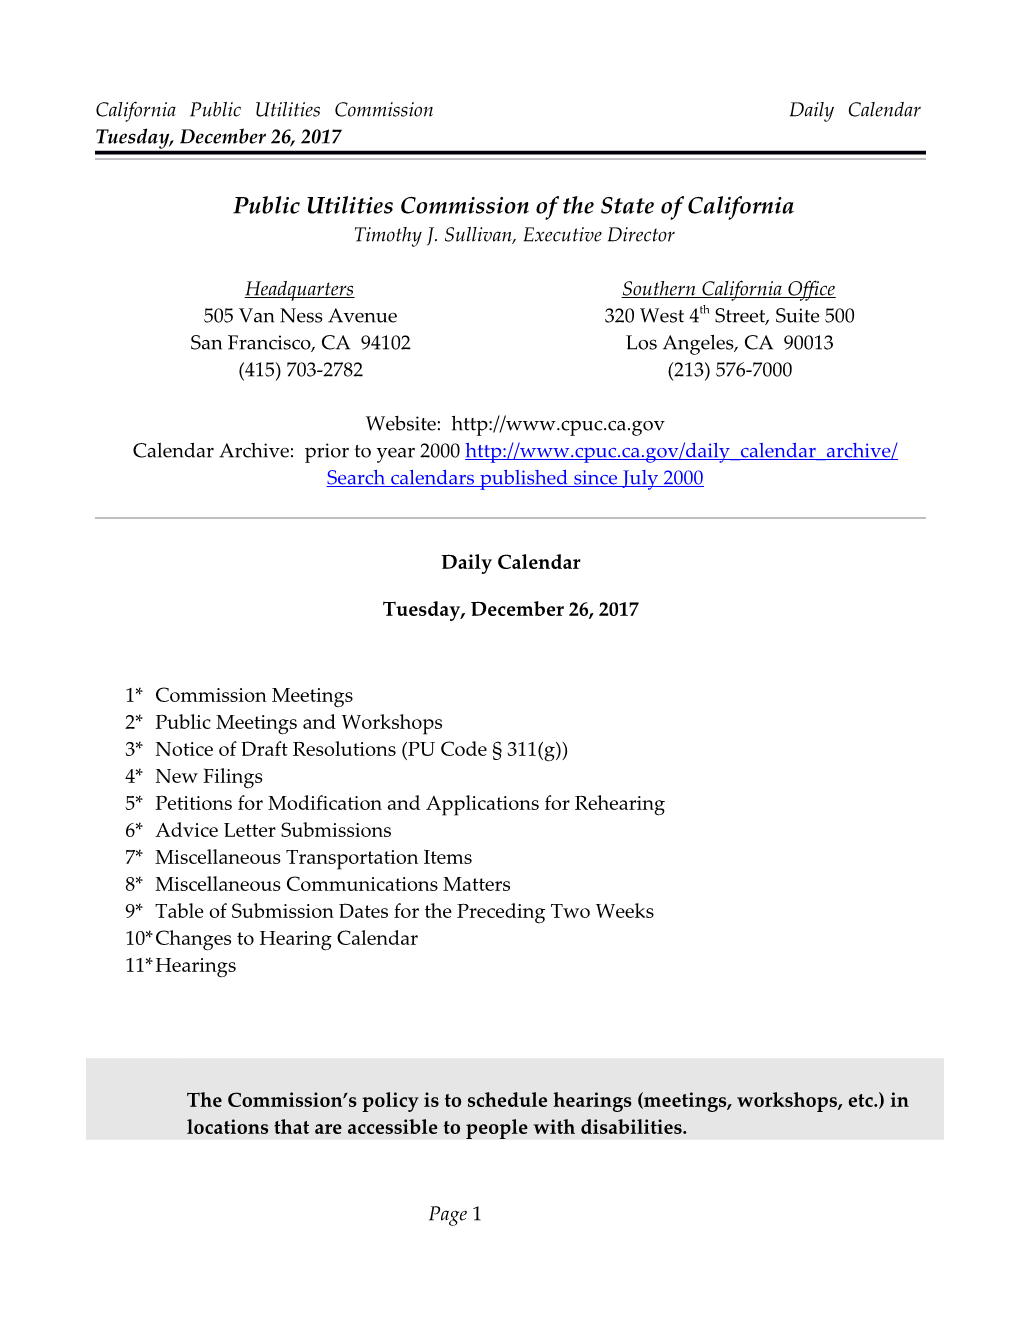 California Public Utilities Commission Daily Calendar Tuesday, December 26, 2017